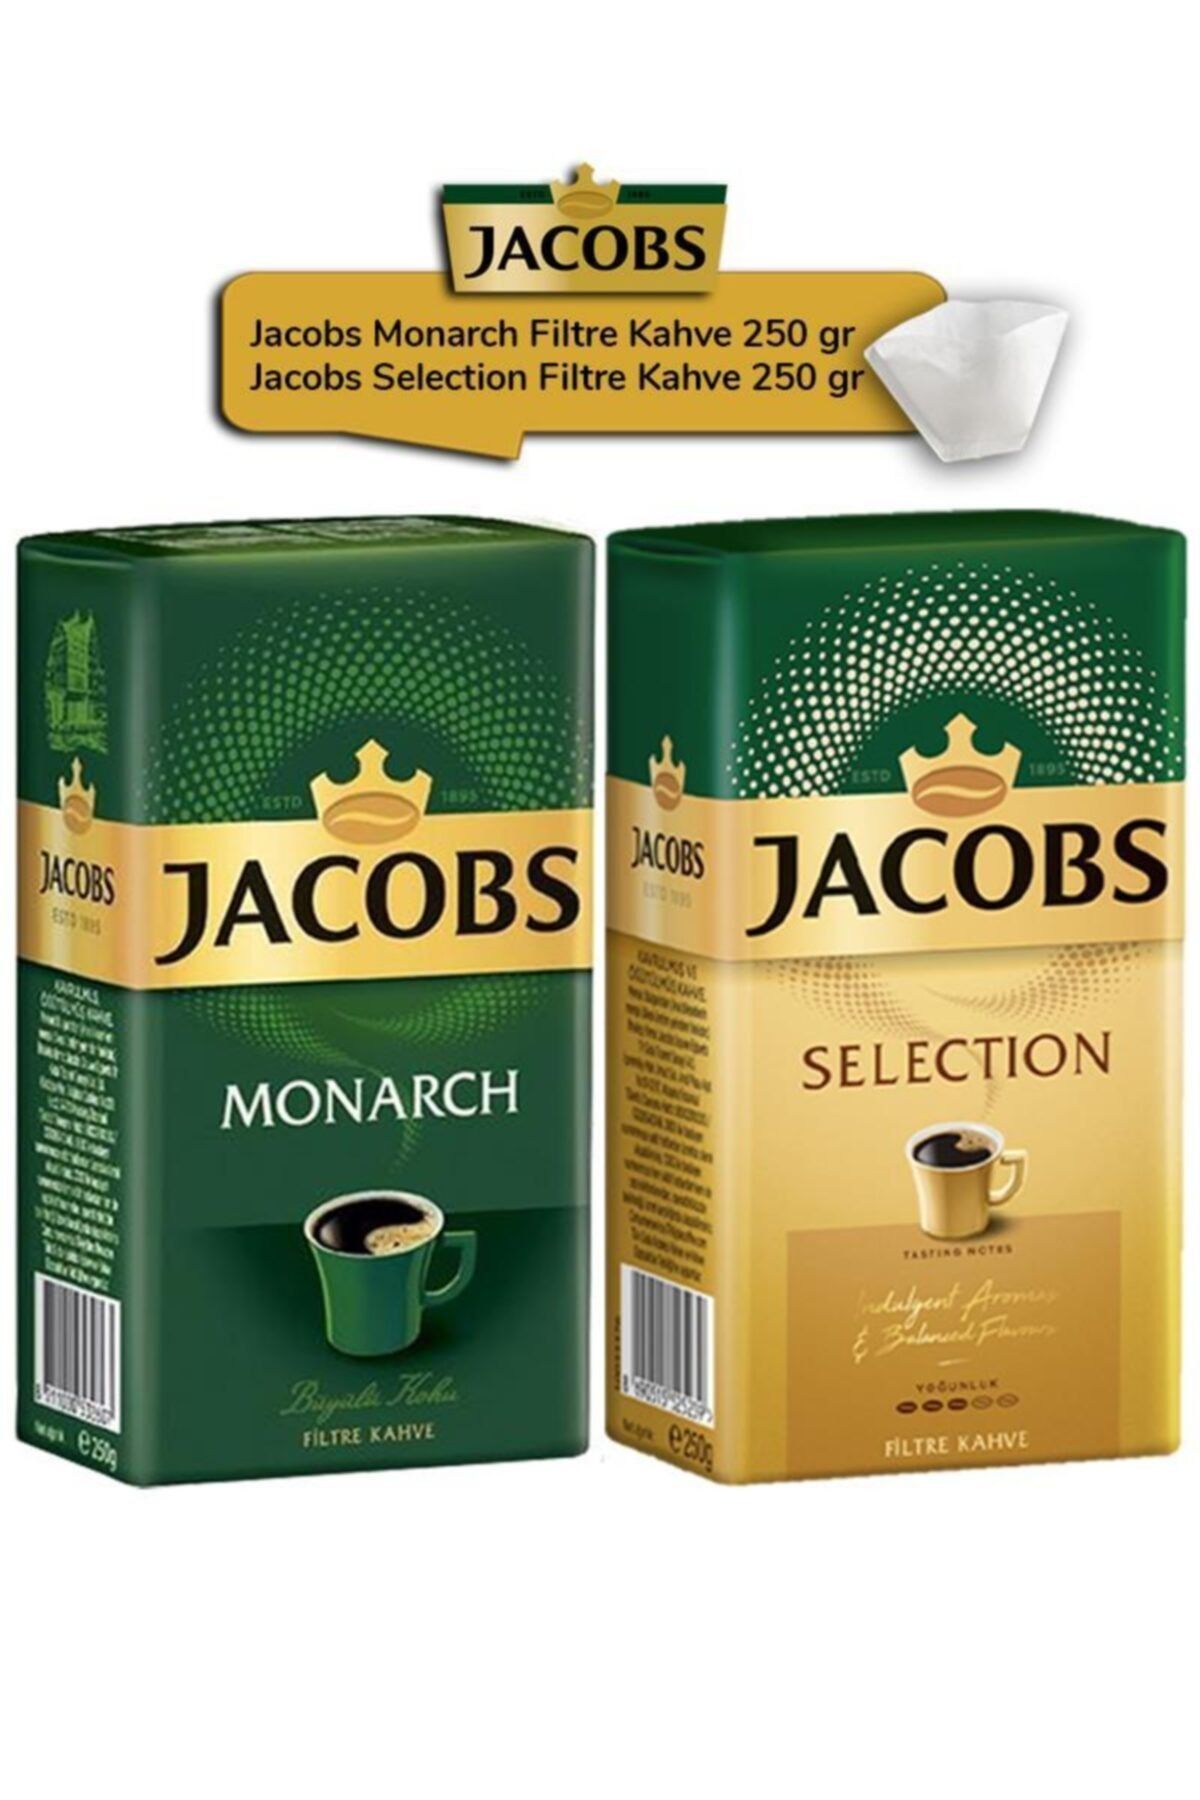 Jacobs Monarch Filtre Kahve 250 Gr & Selection Filtre Kahve 250 Gr - 40 Adet